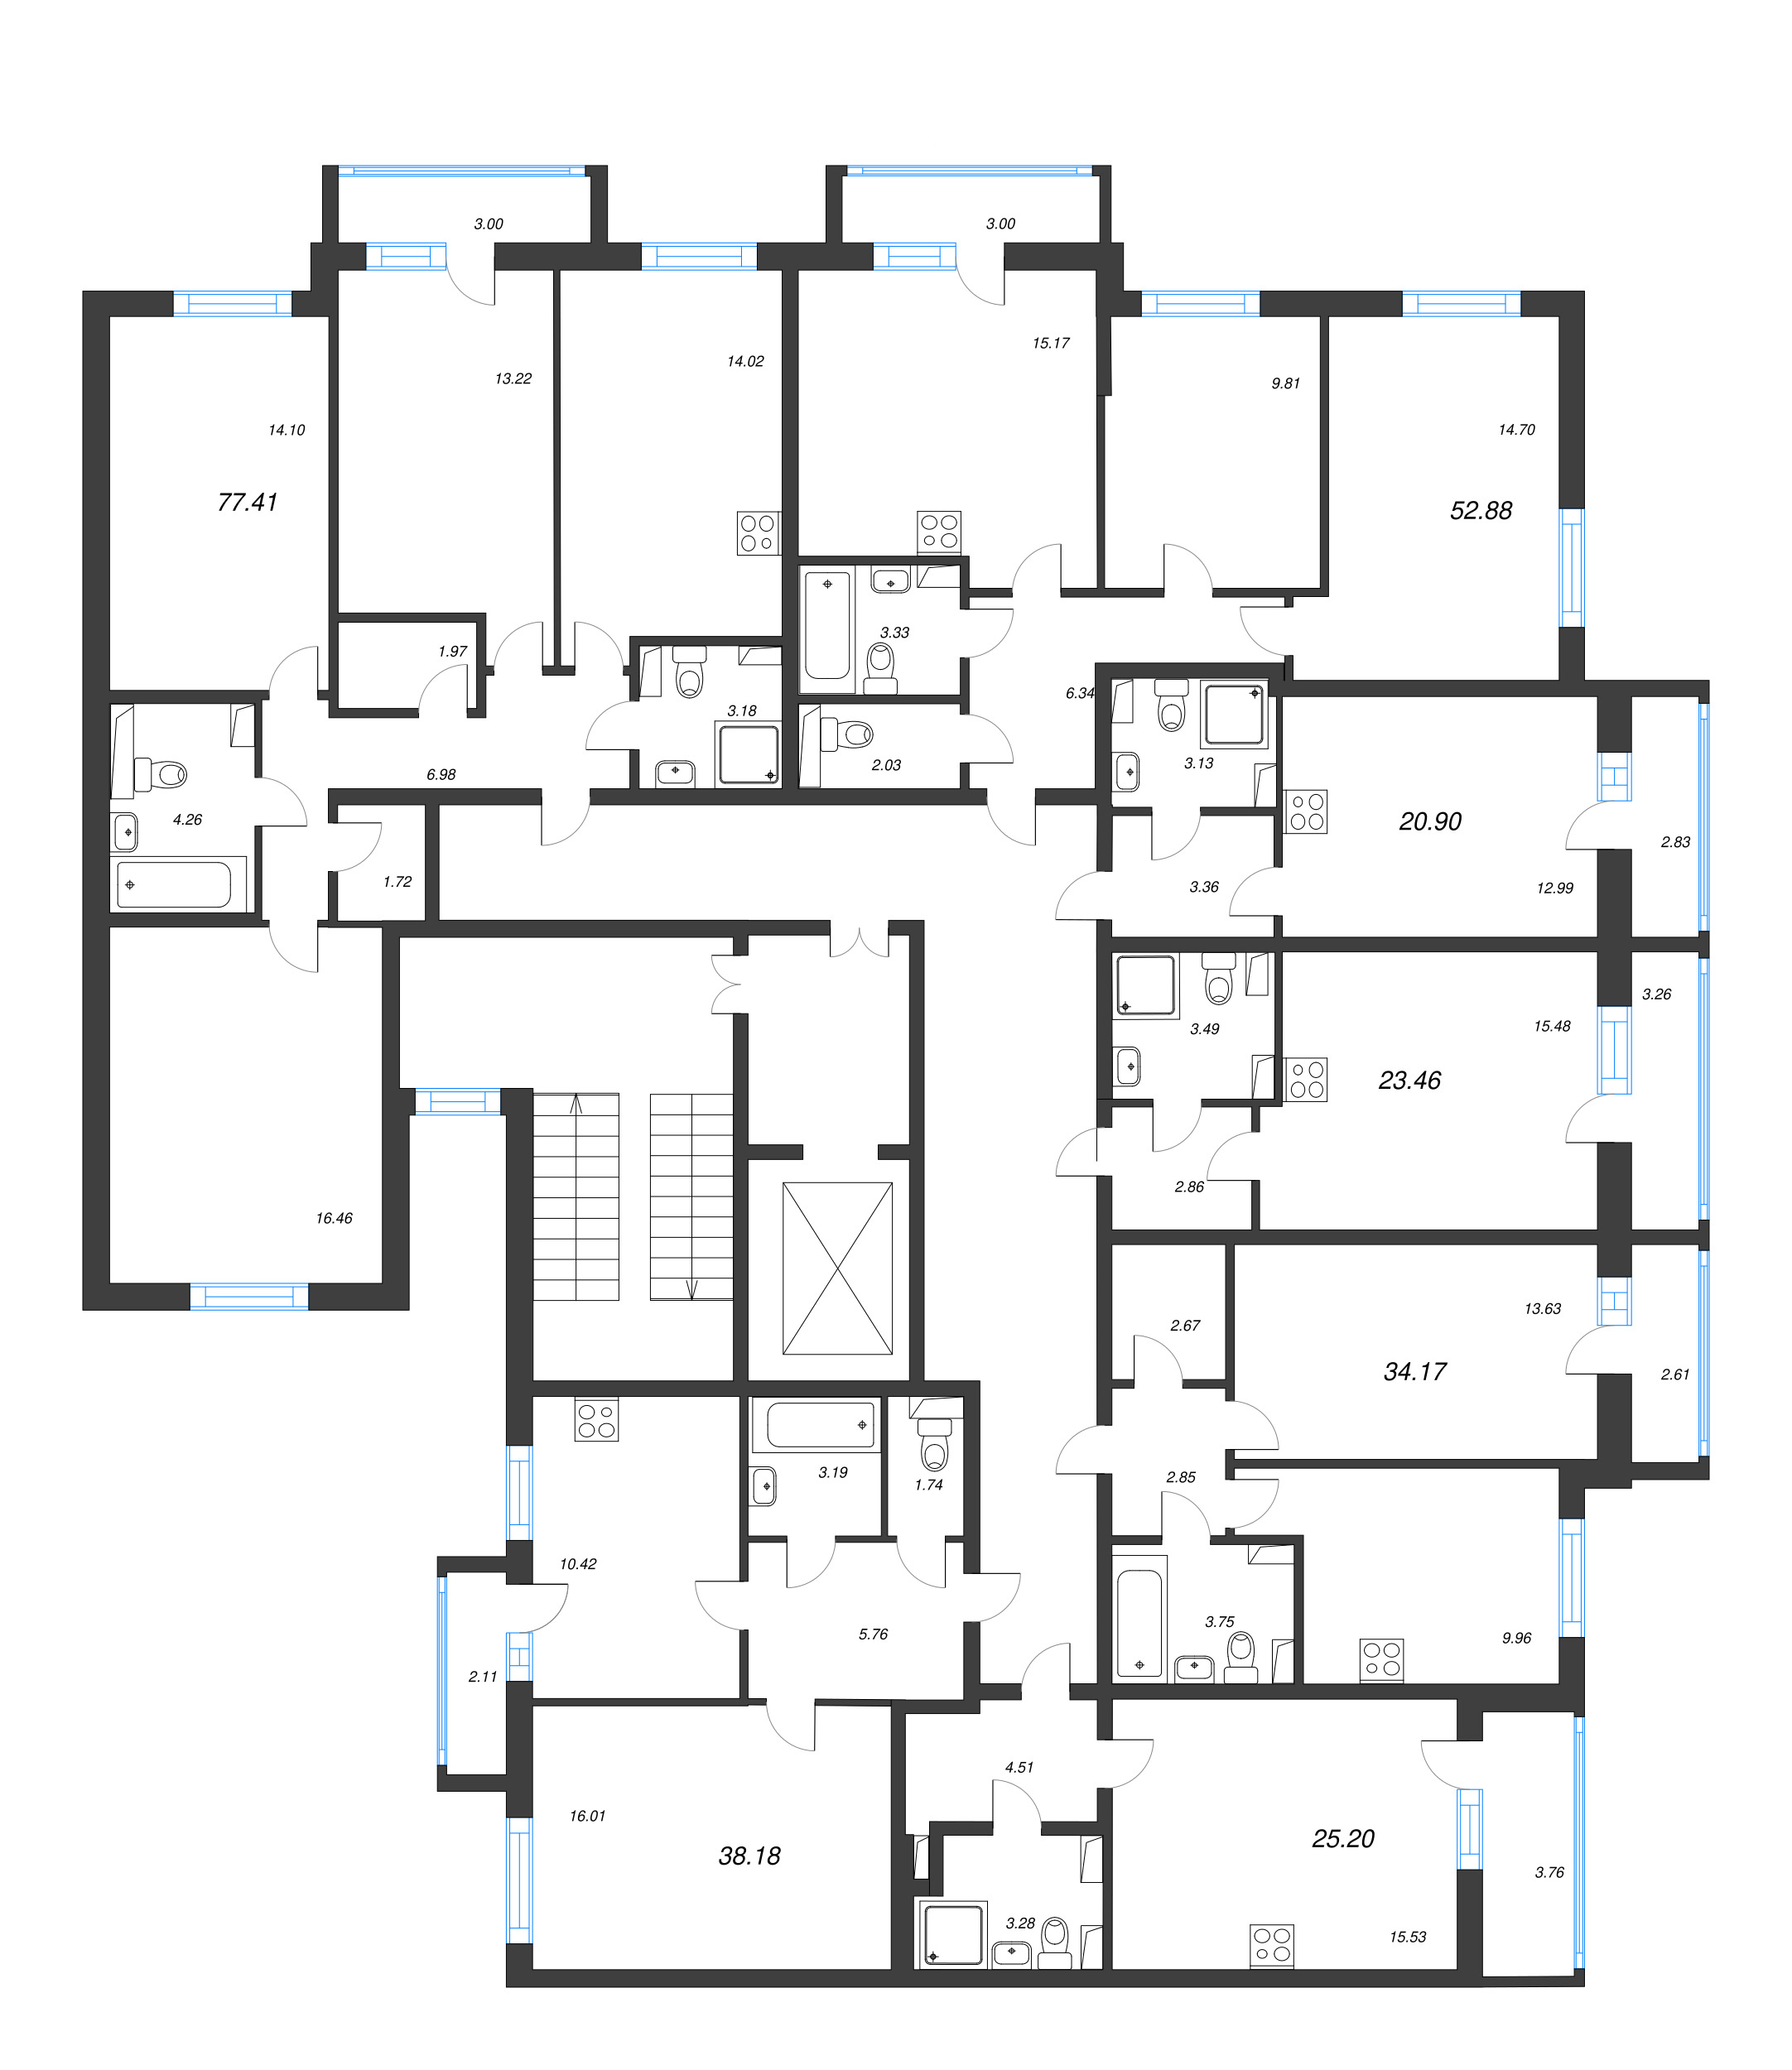 3-комнатная (Евро) квартира, 52.88 м² - планировка этажа